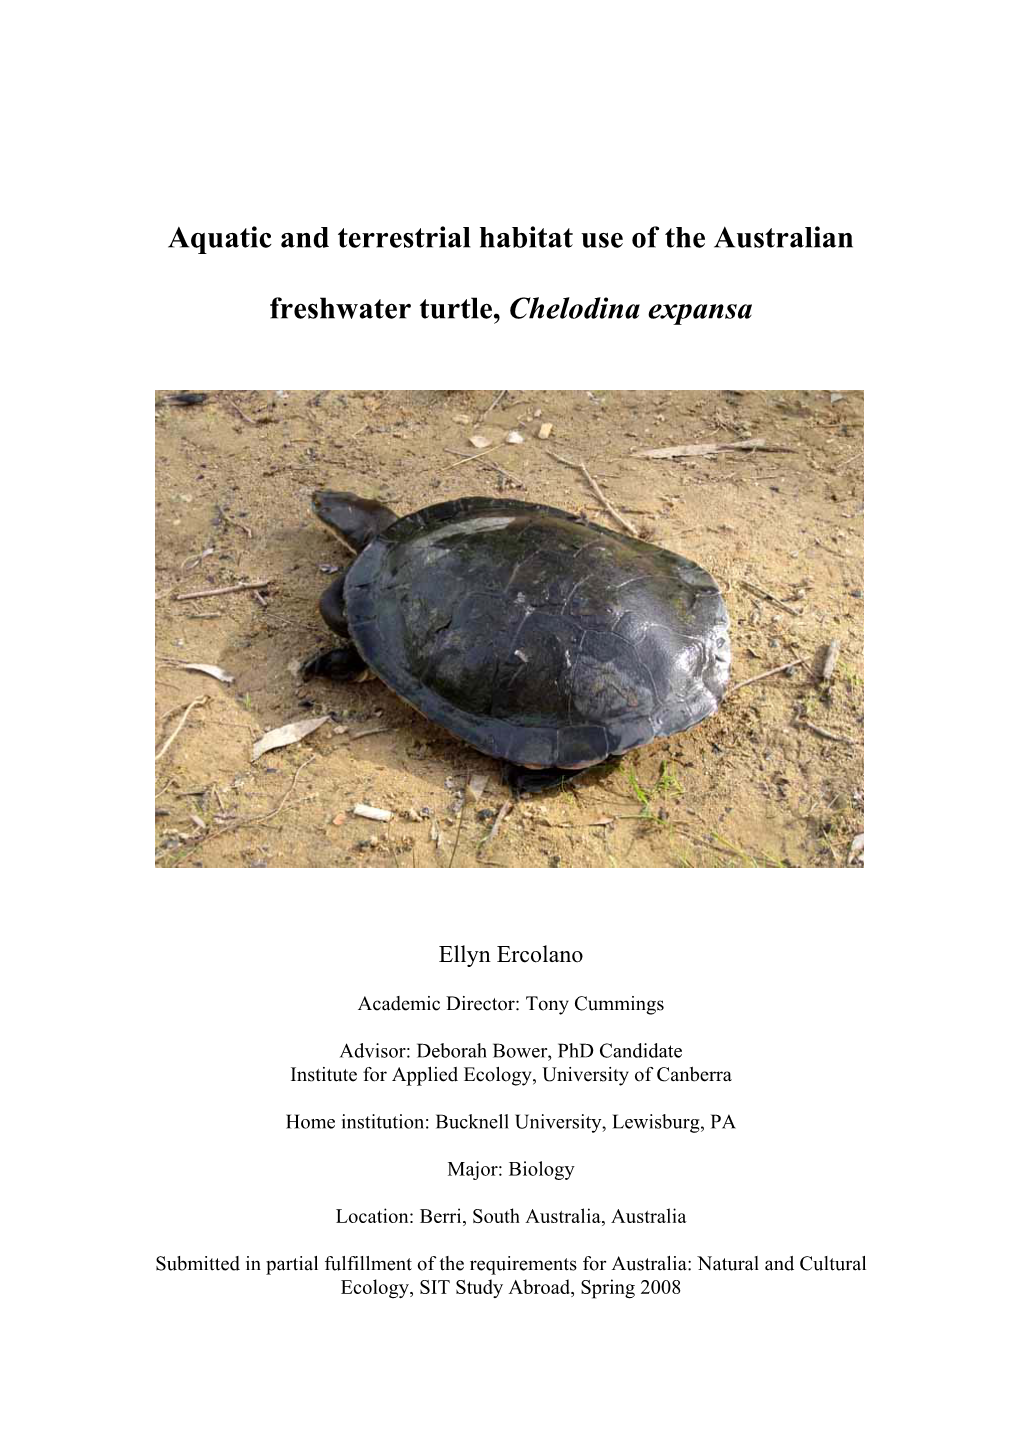 Aquatic and Terrestrial Habitat Use of the Australian Freshwater Turtle